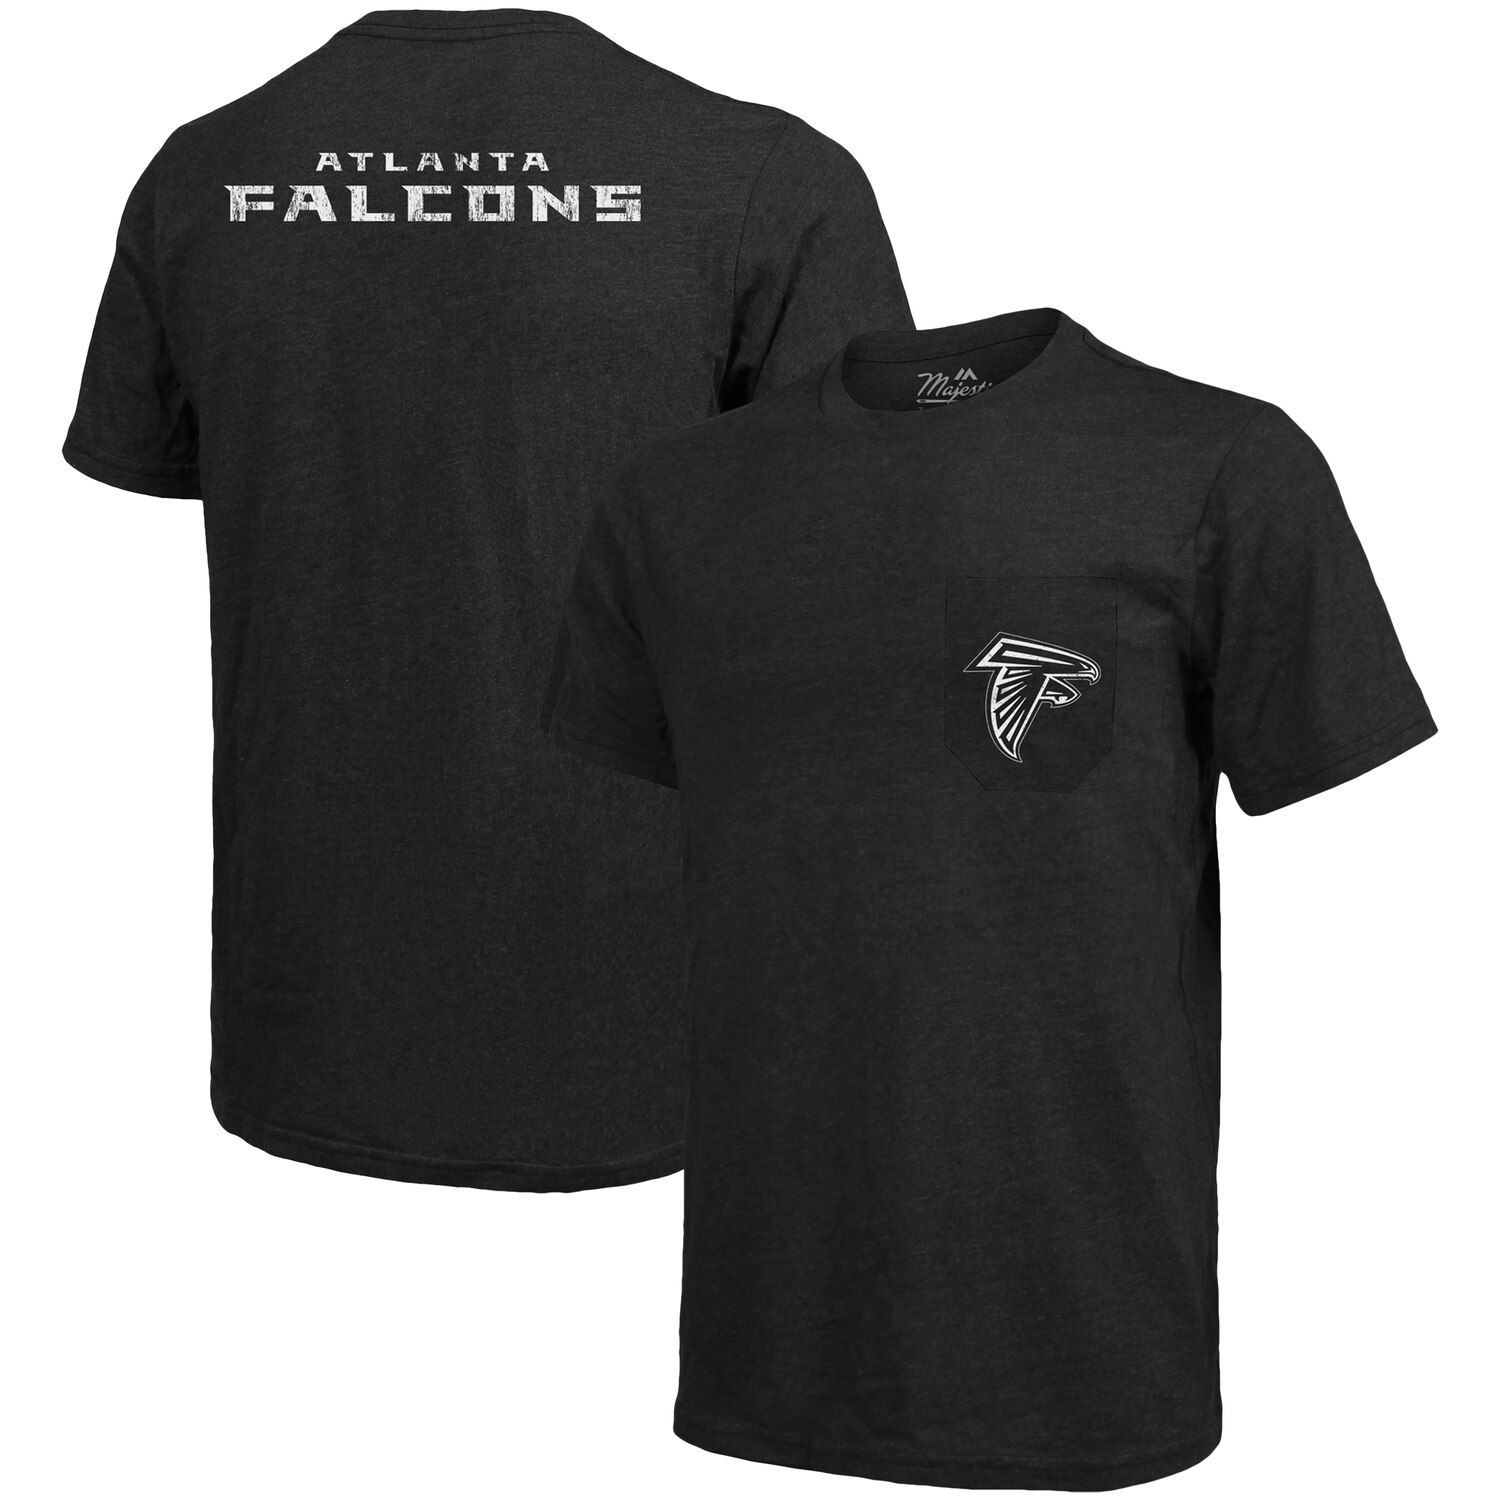 Футболка с карманами Tri-Blend Atlanta Falcons Threads - черный Majestic черная футболка с принтом tri blend pocket atlanta falcons majestic черный